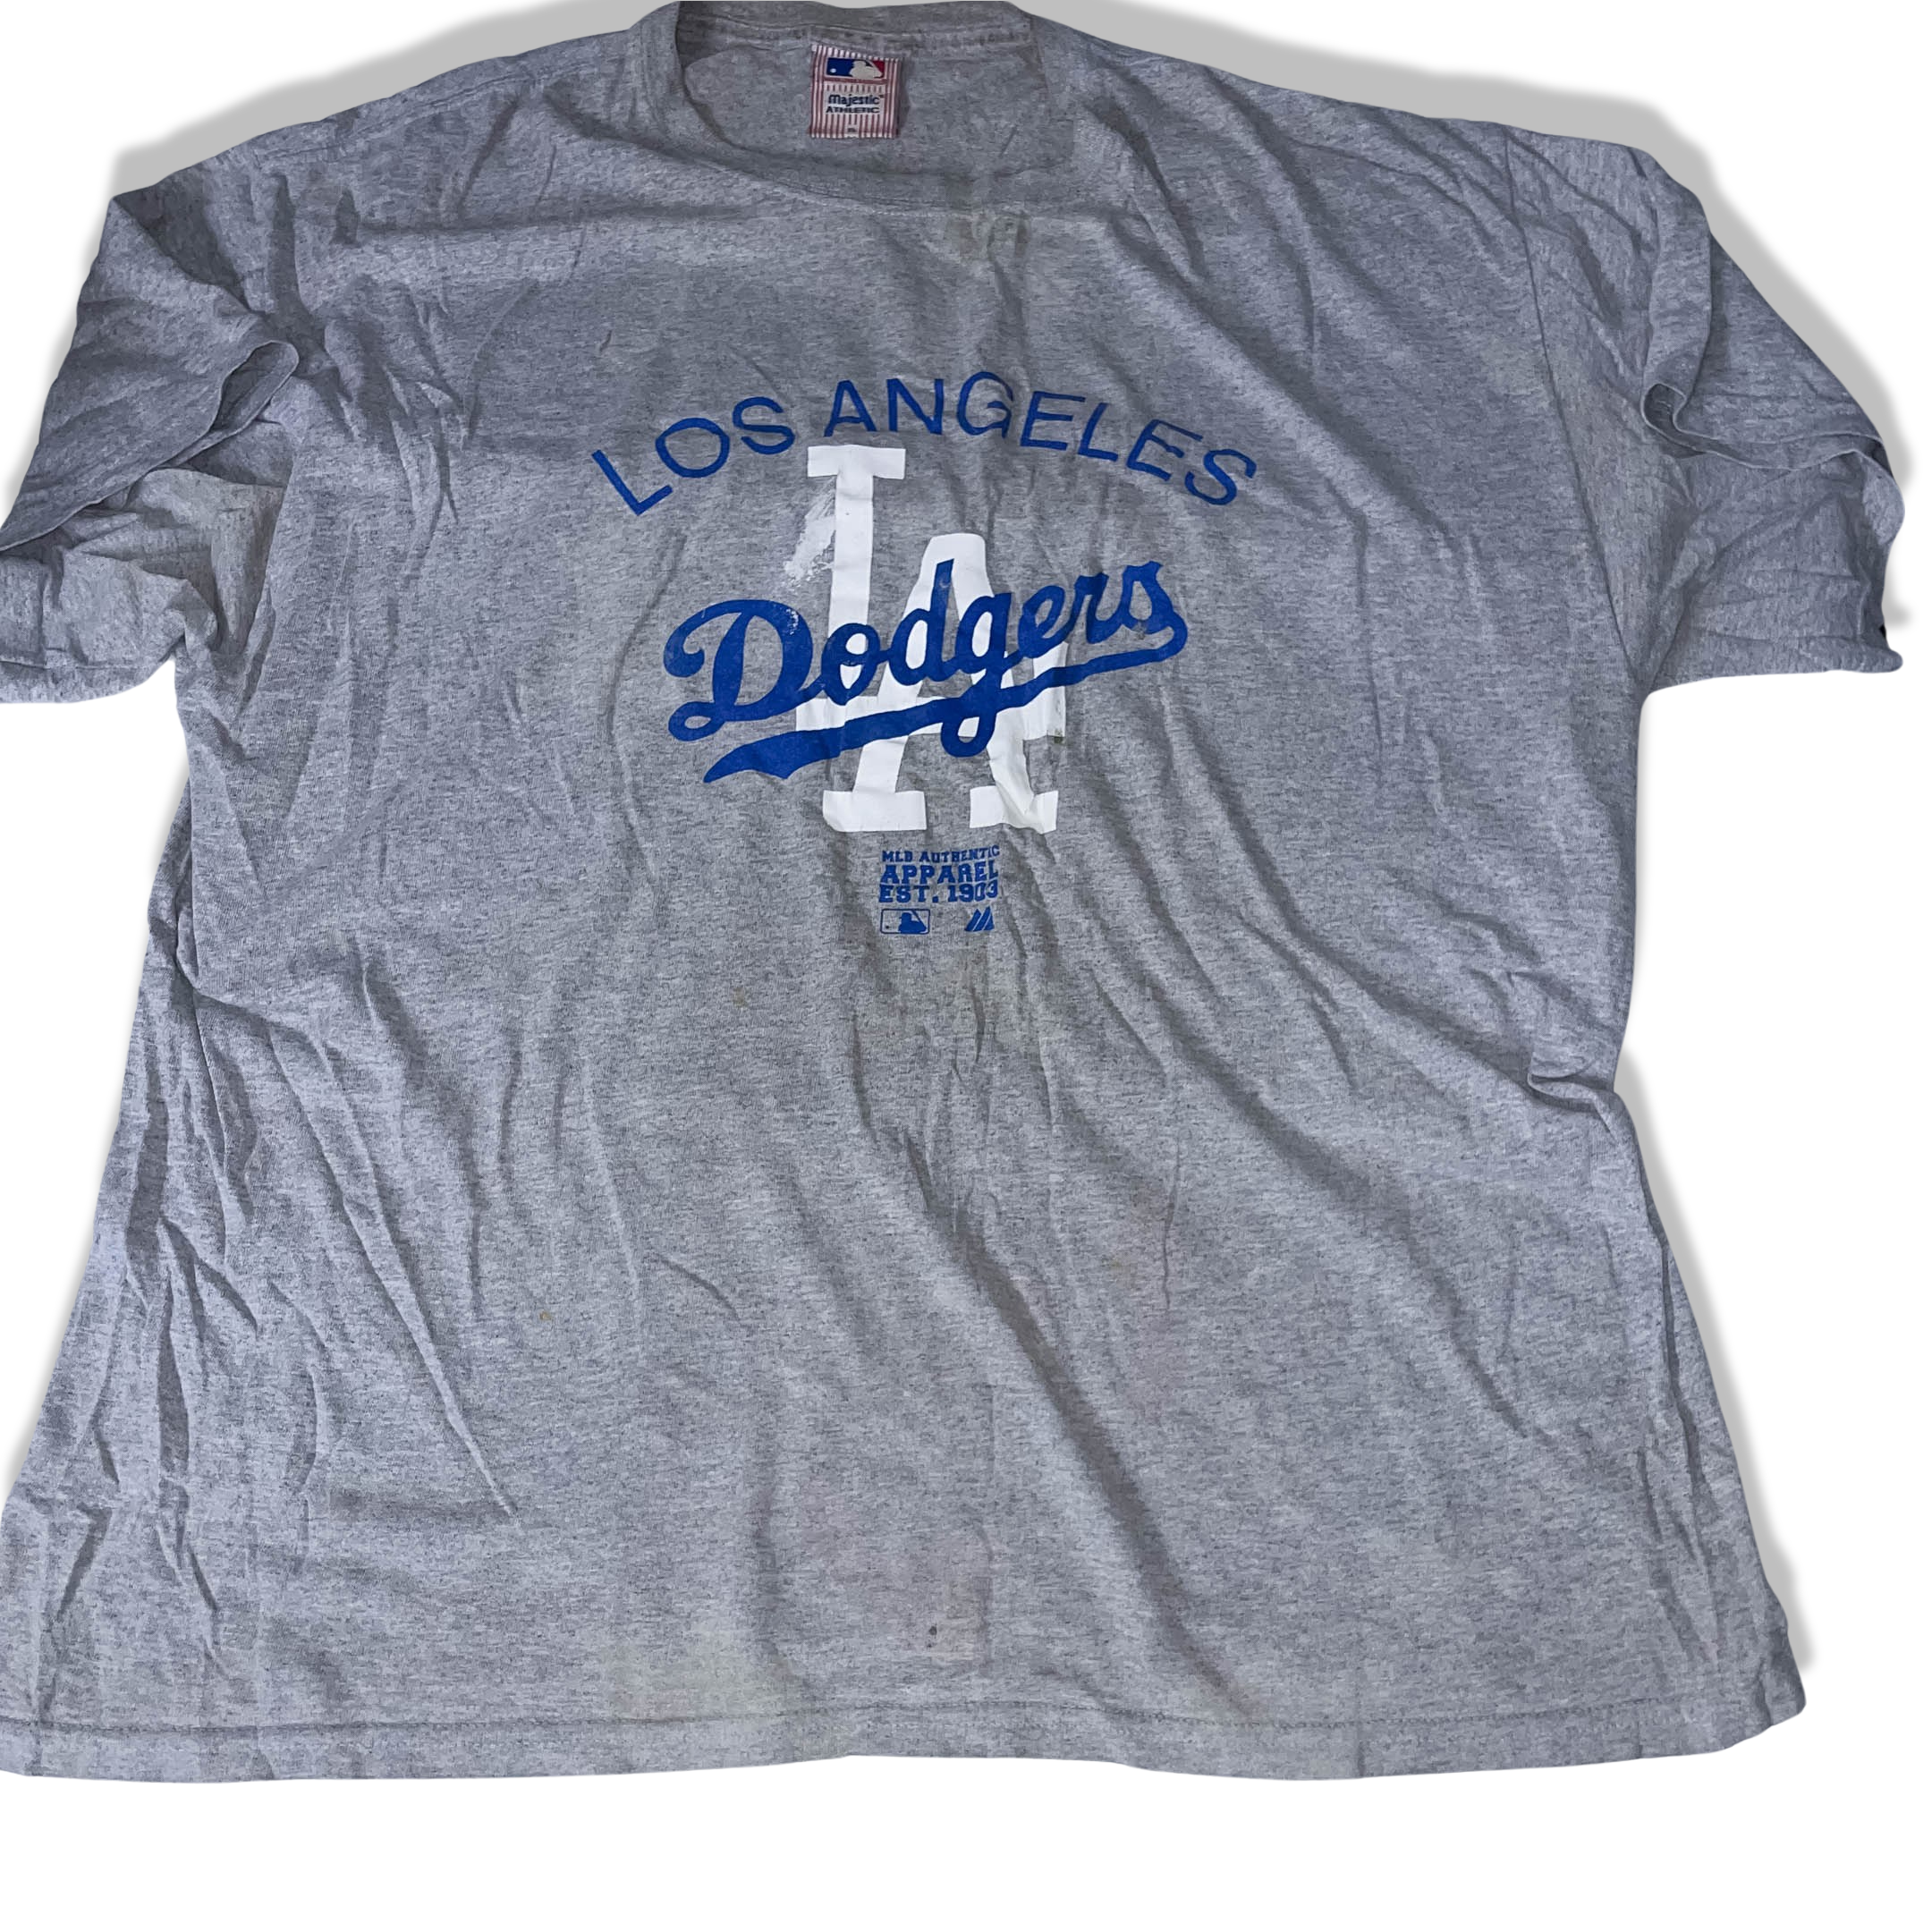 Vintage Majestic Athletics Los Angeles Dodgers grey XL tees